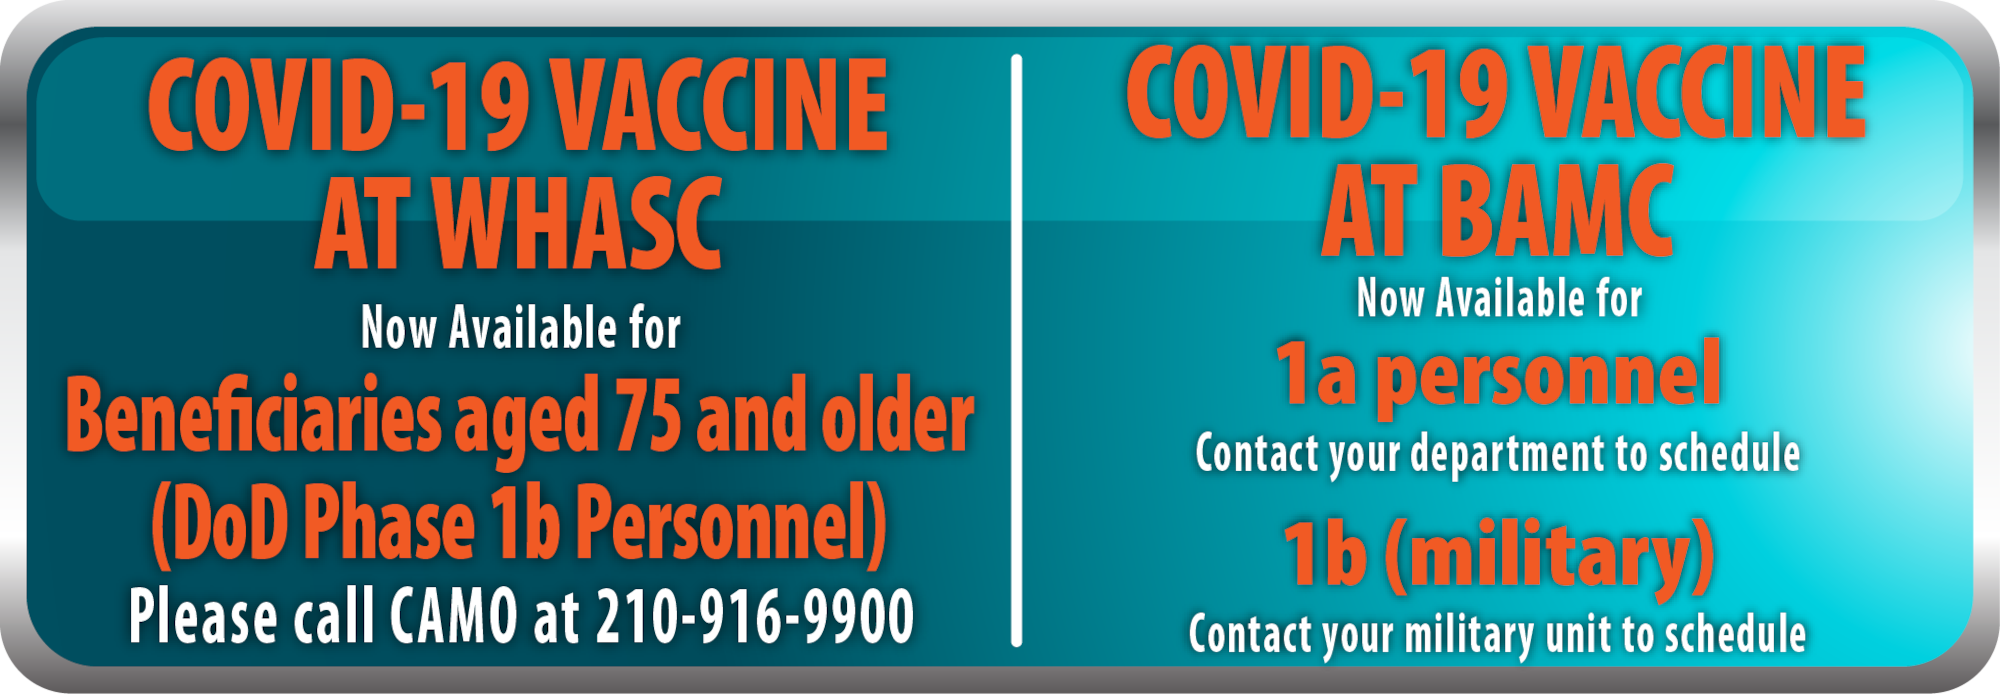 Vaccine info